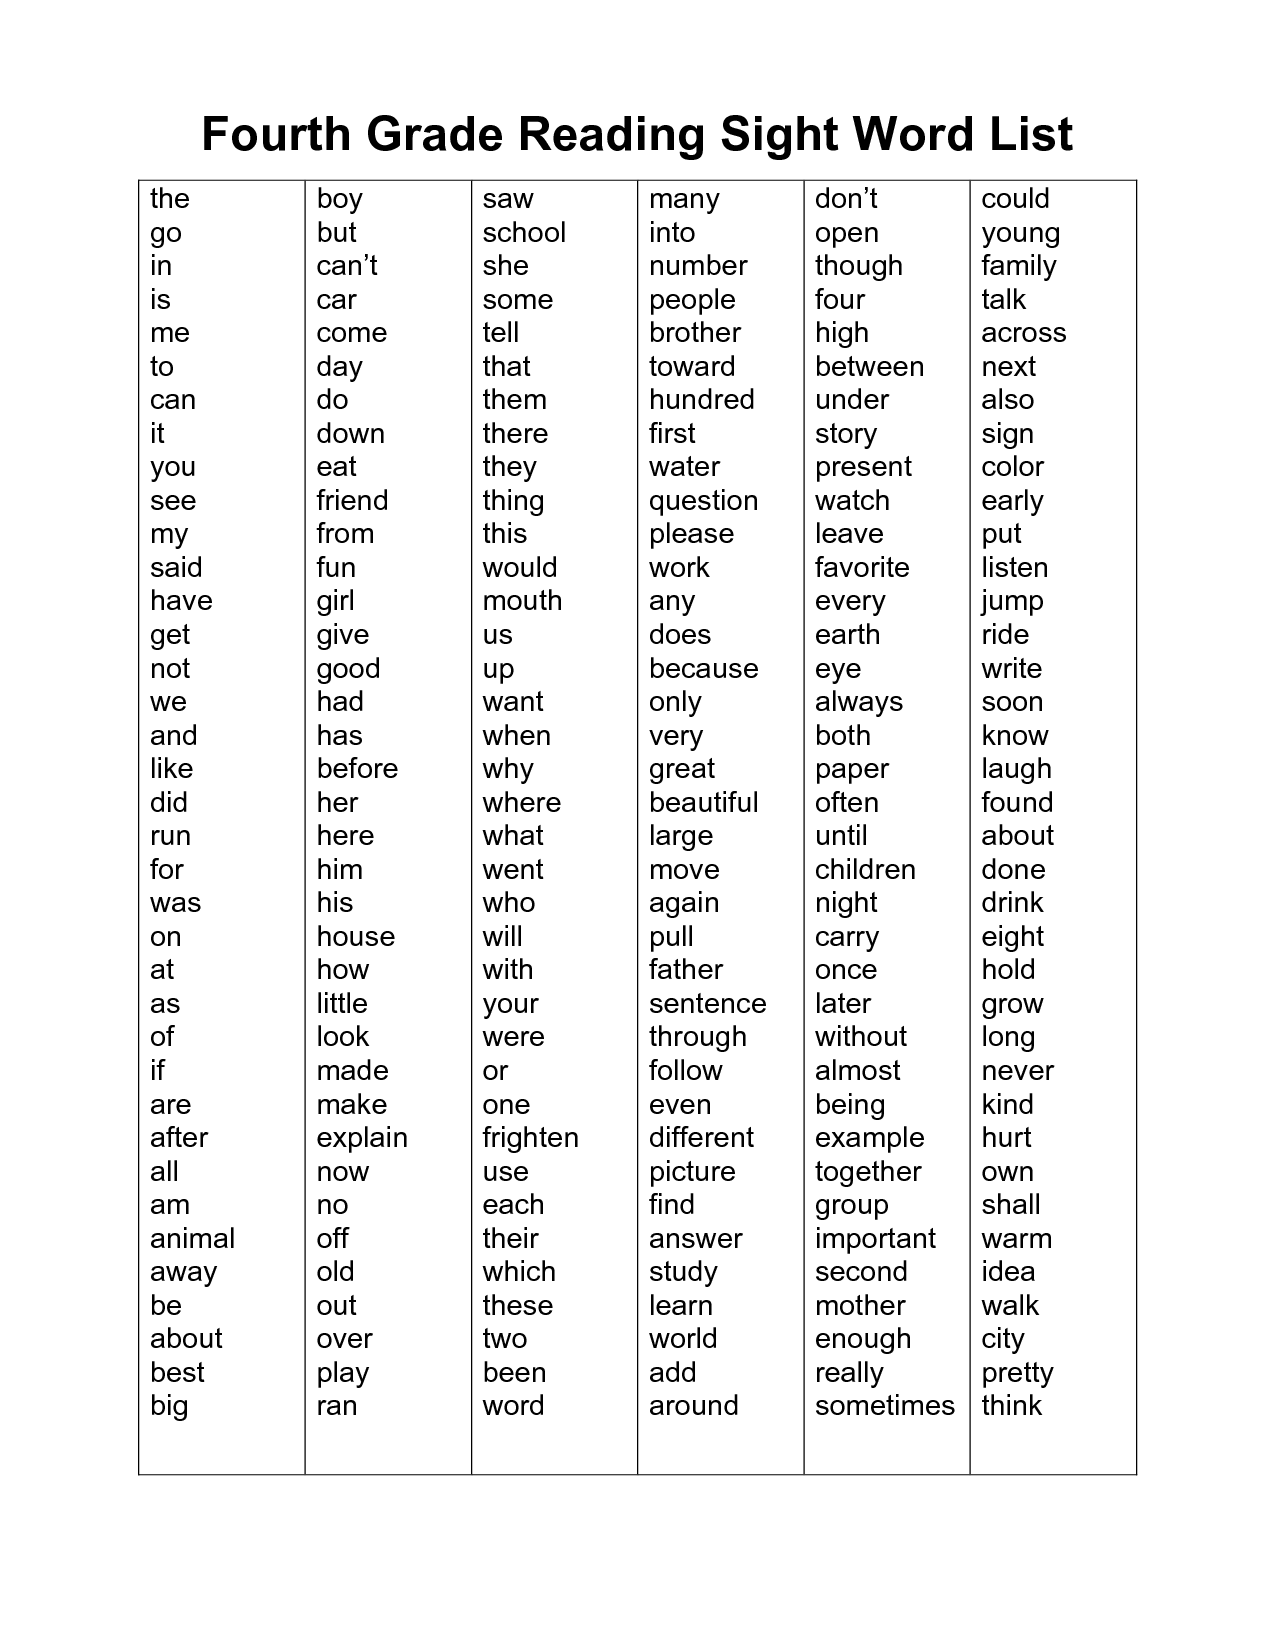 4th Grade Reading Sight Word List Image